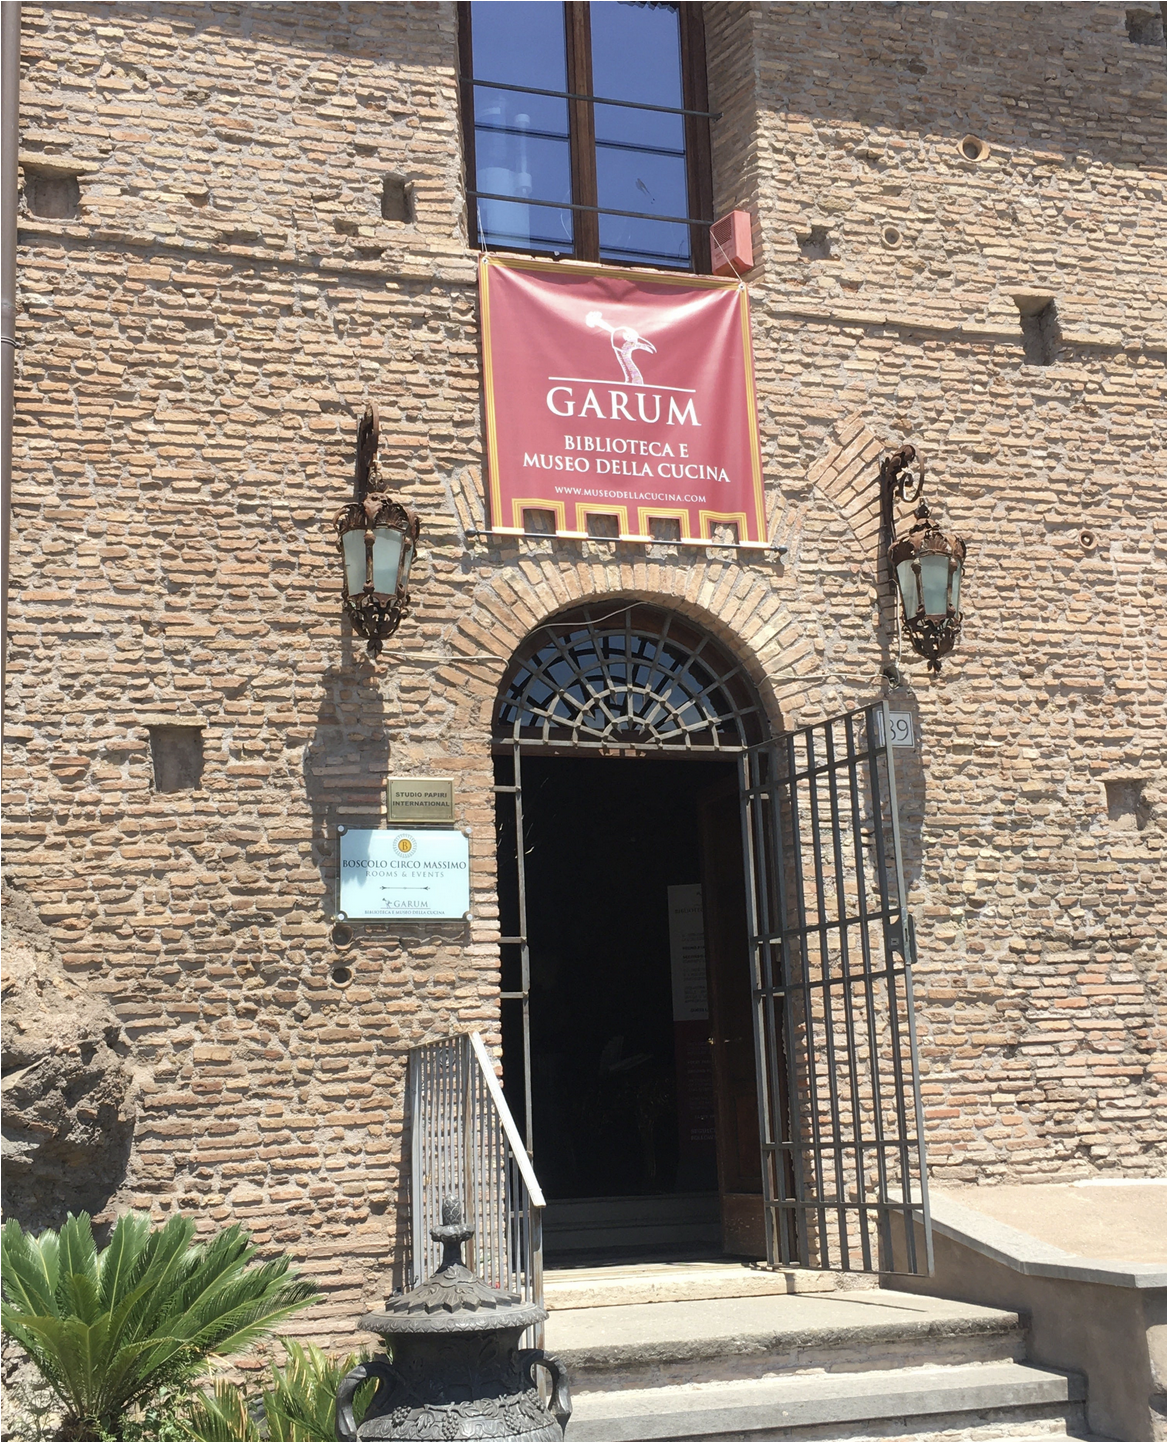 A Museum Called "Garum"